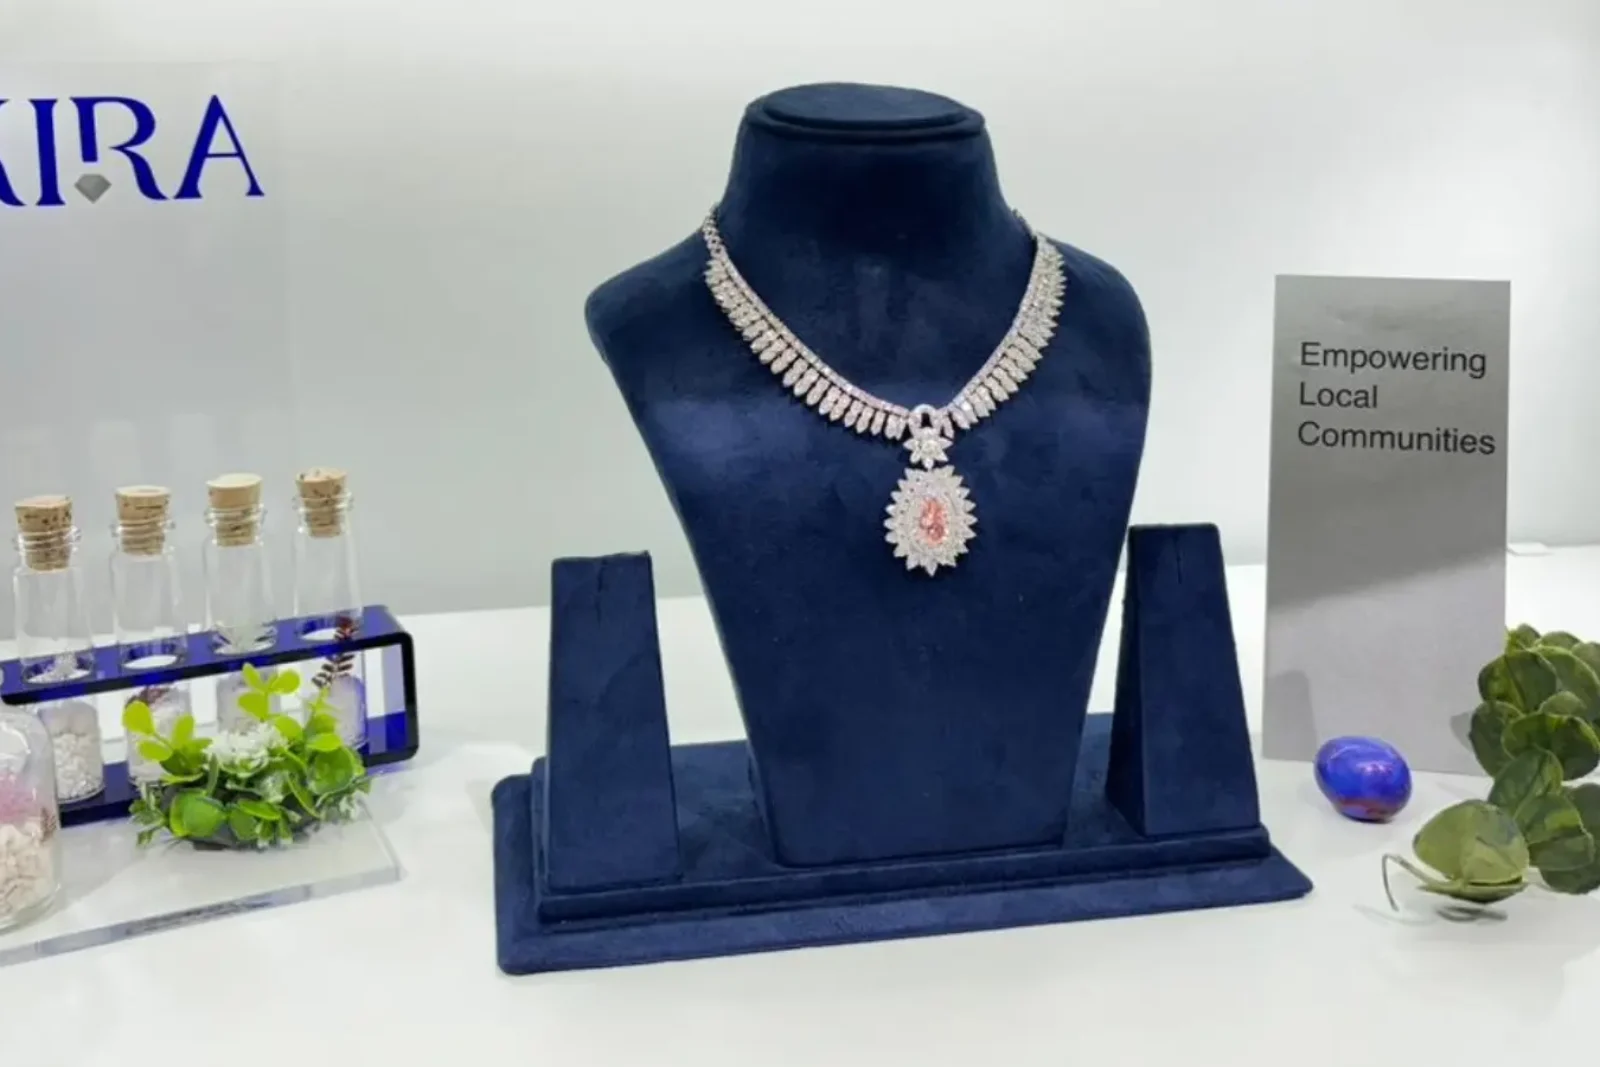 Kira CVD Diamond Jewellry at a Exhibition